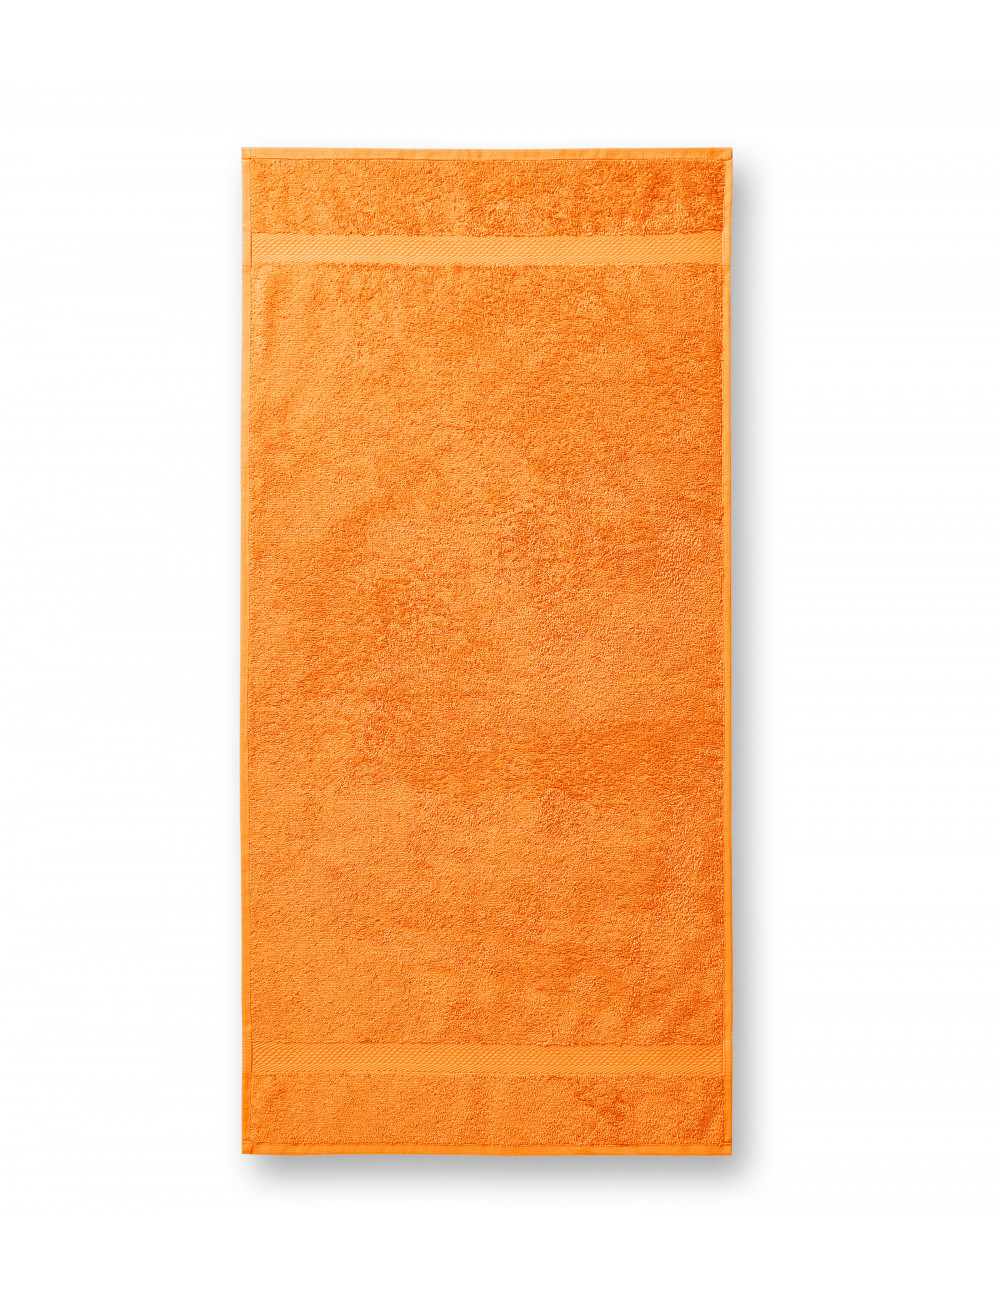 Unisex towel terry towel 903 tangerine Adler Malfini